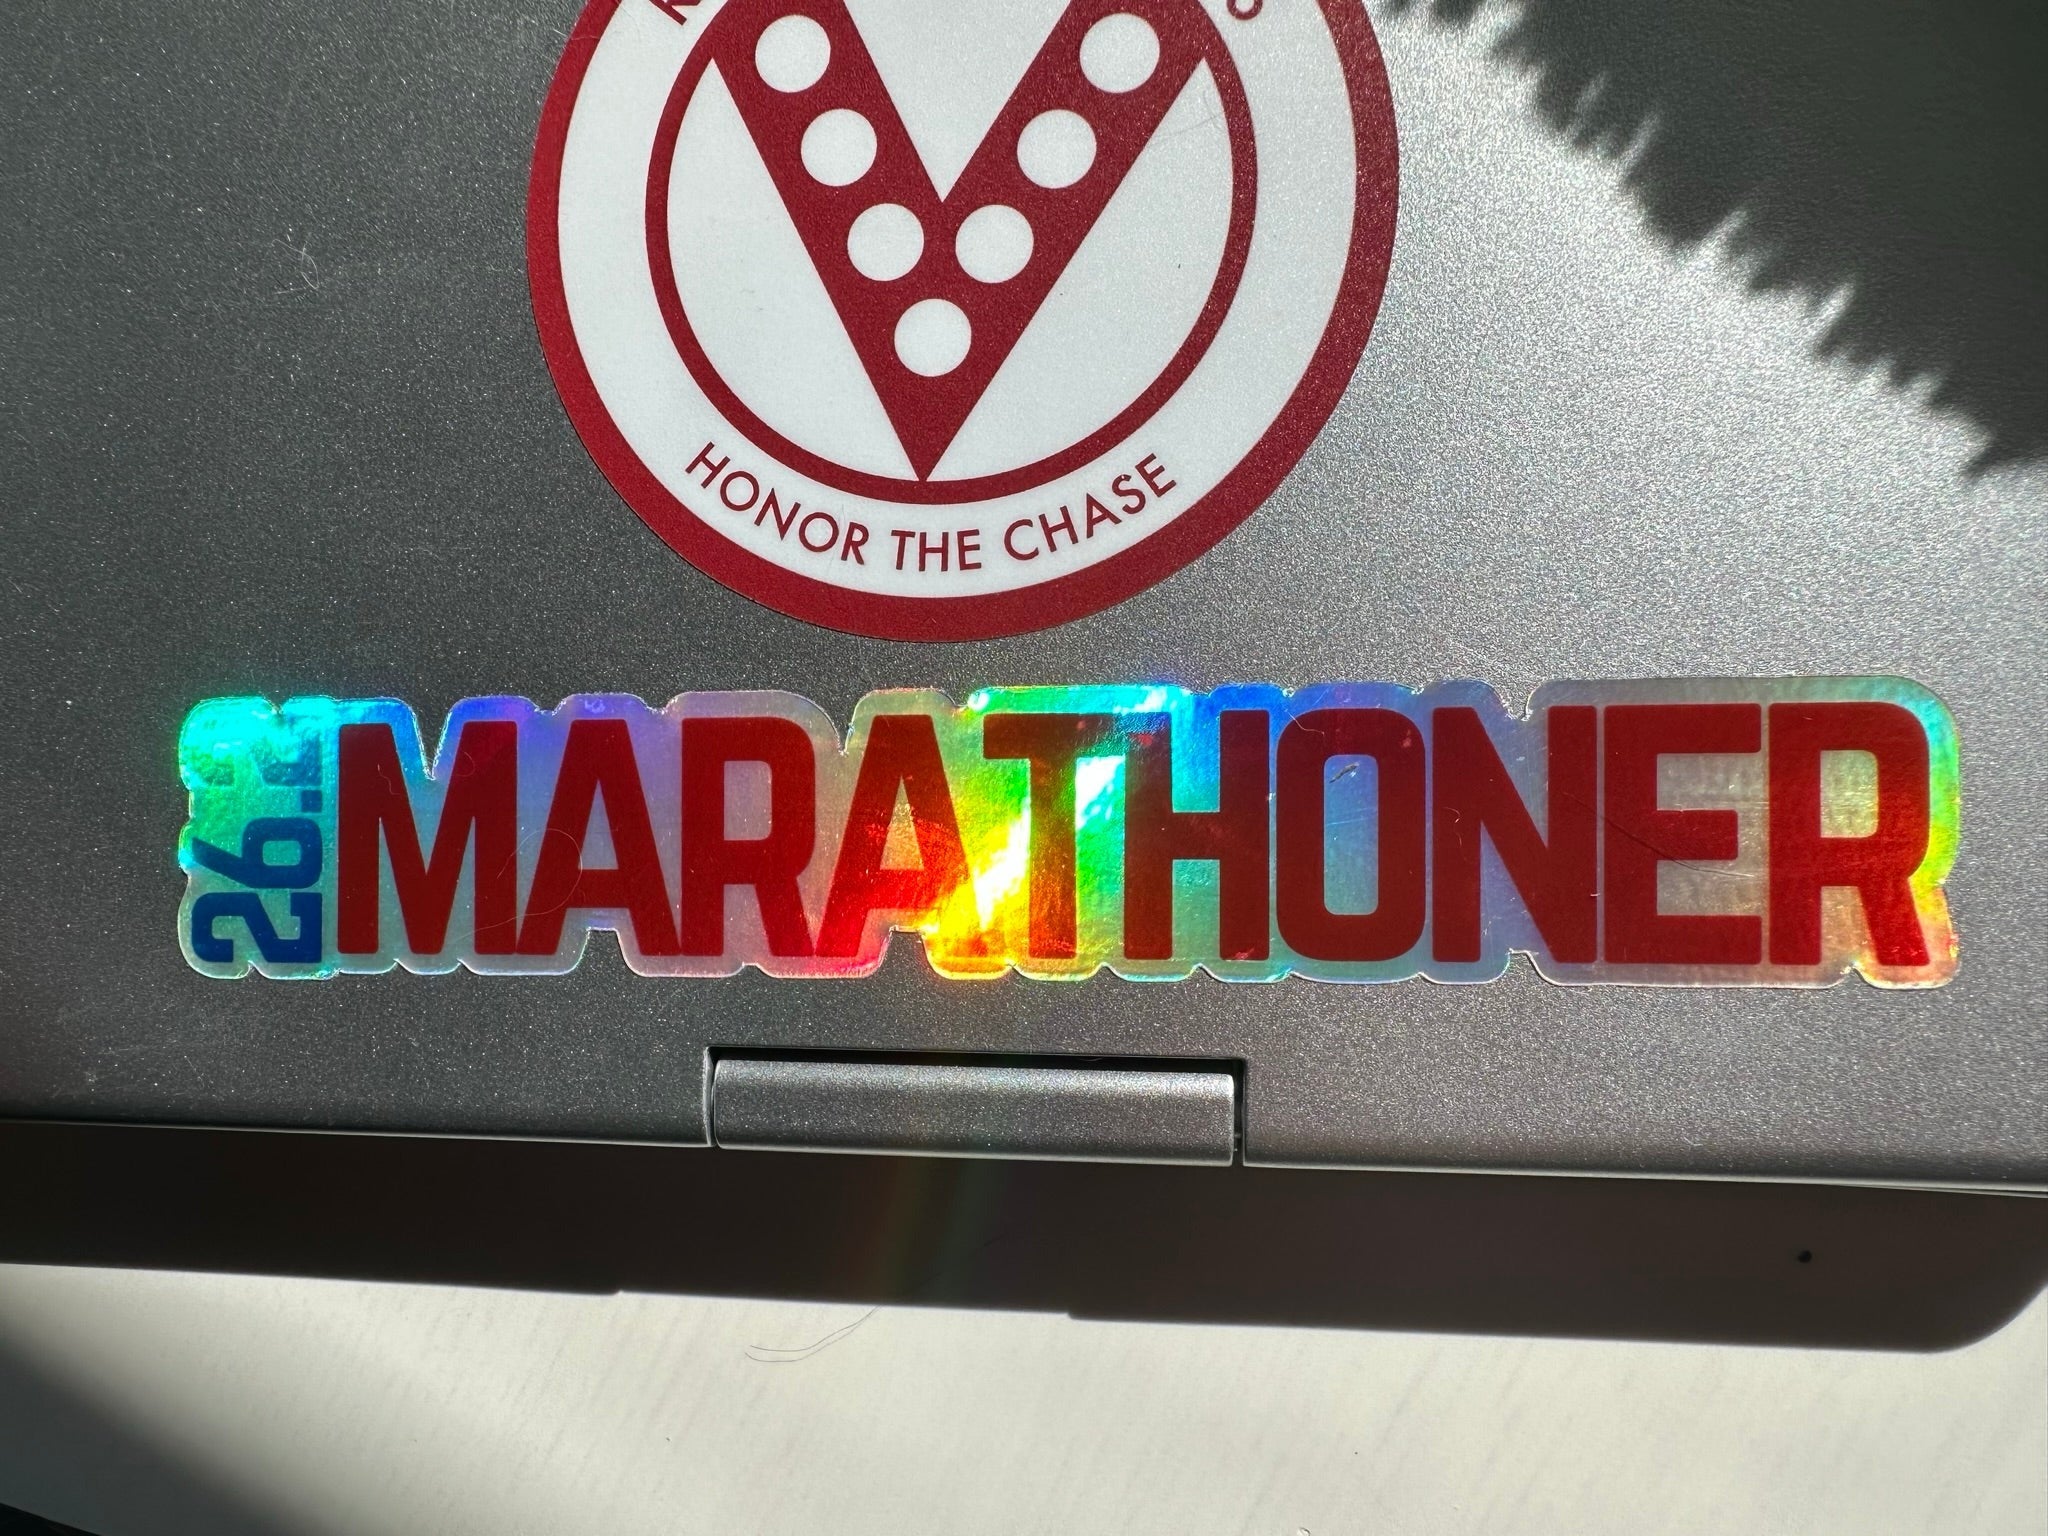 26.2 Marathoner Holographic Sticker